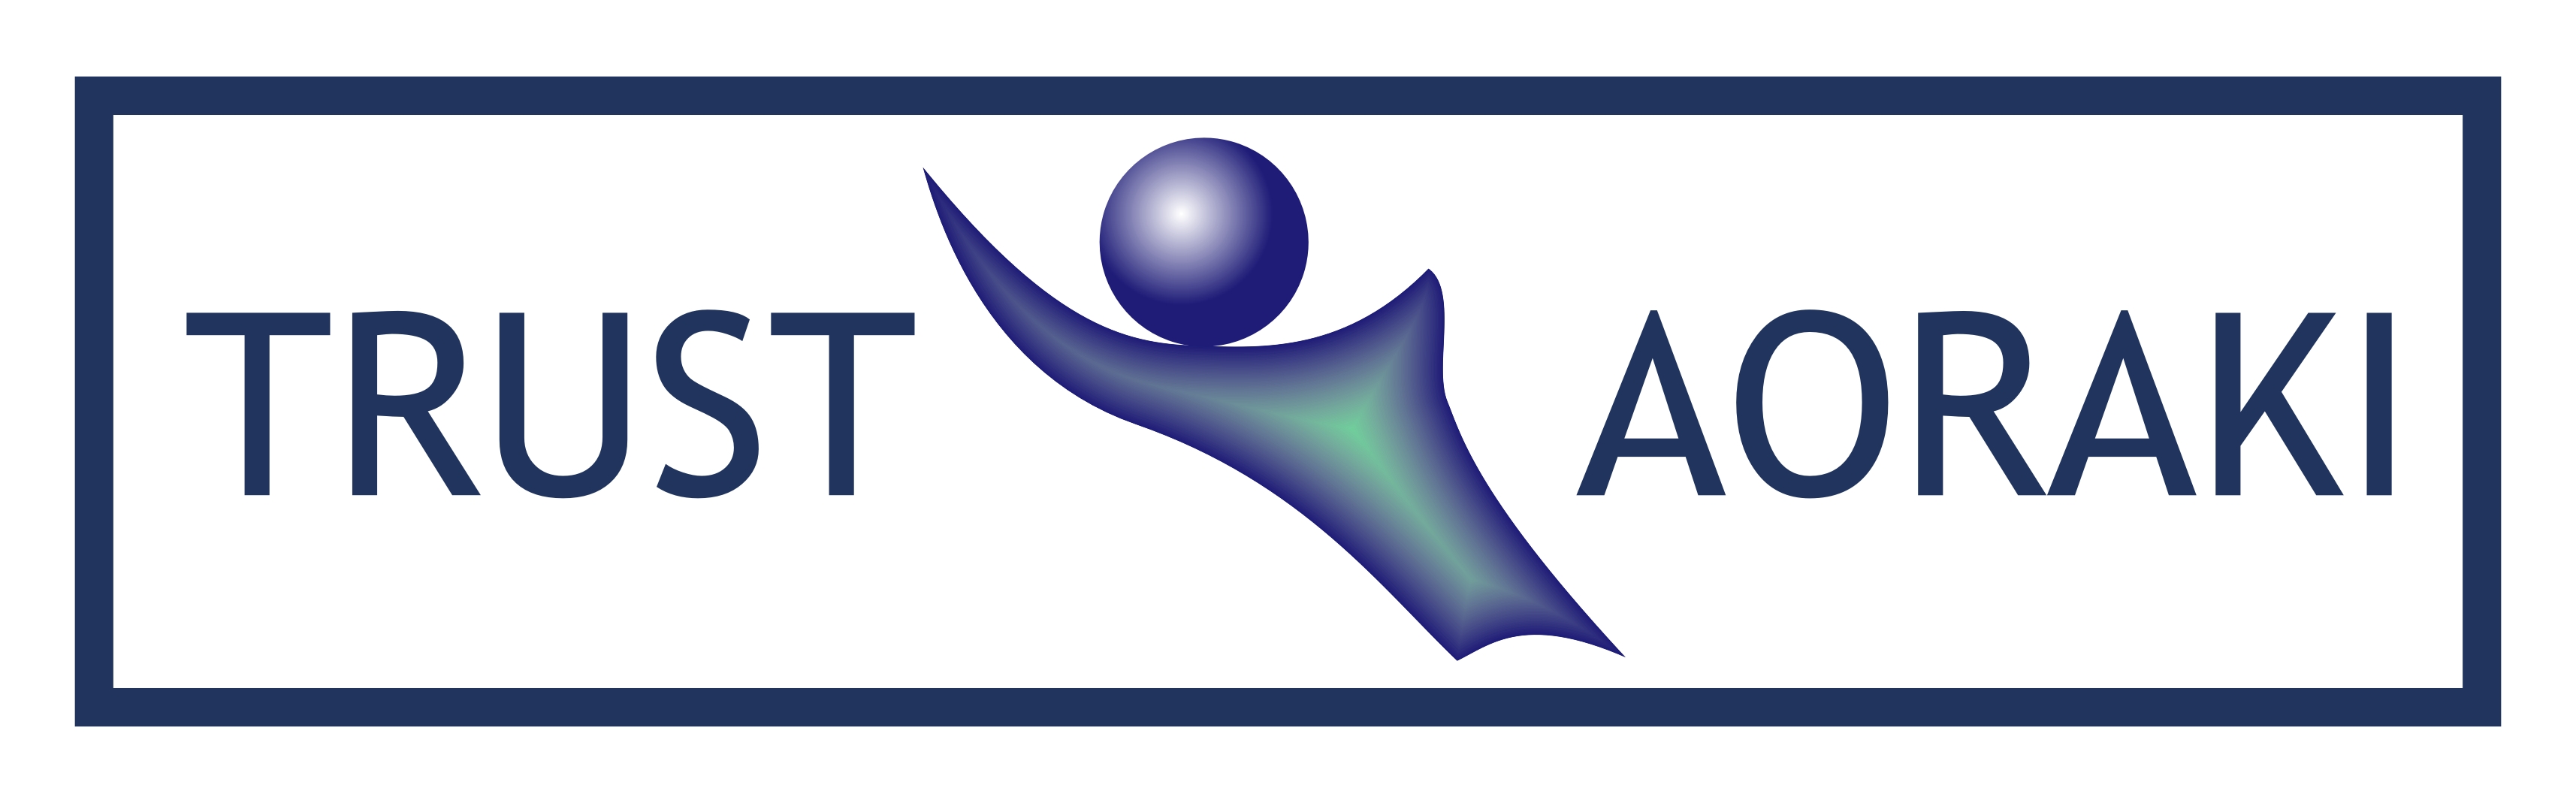 Trust Aoraki logo